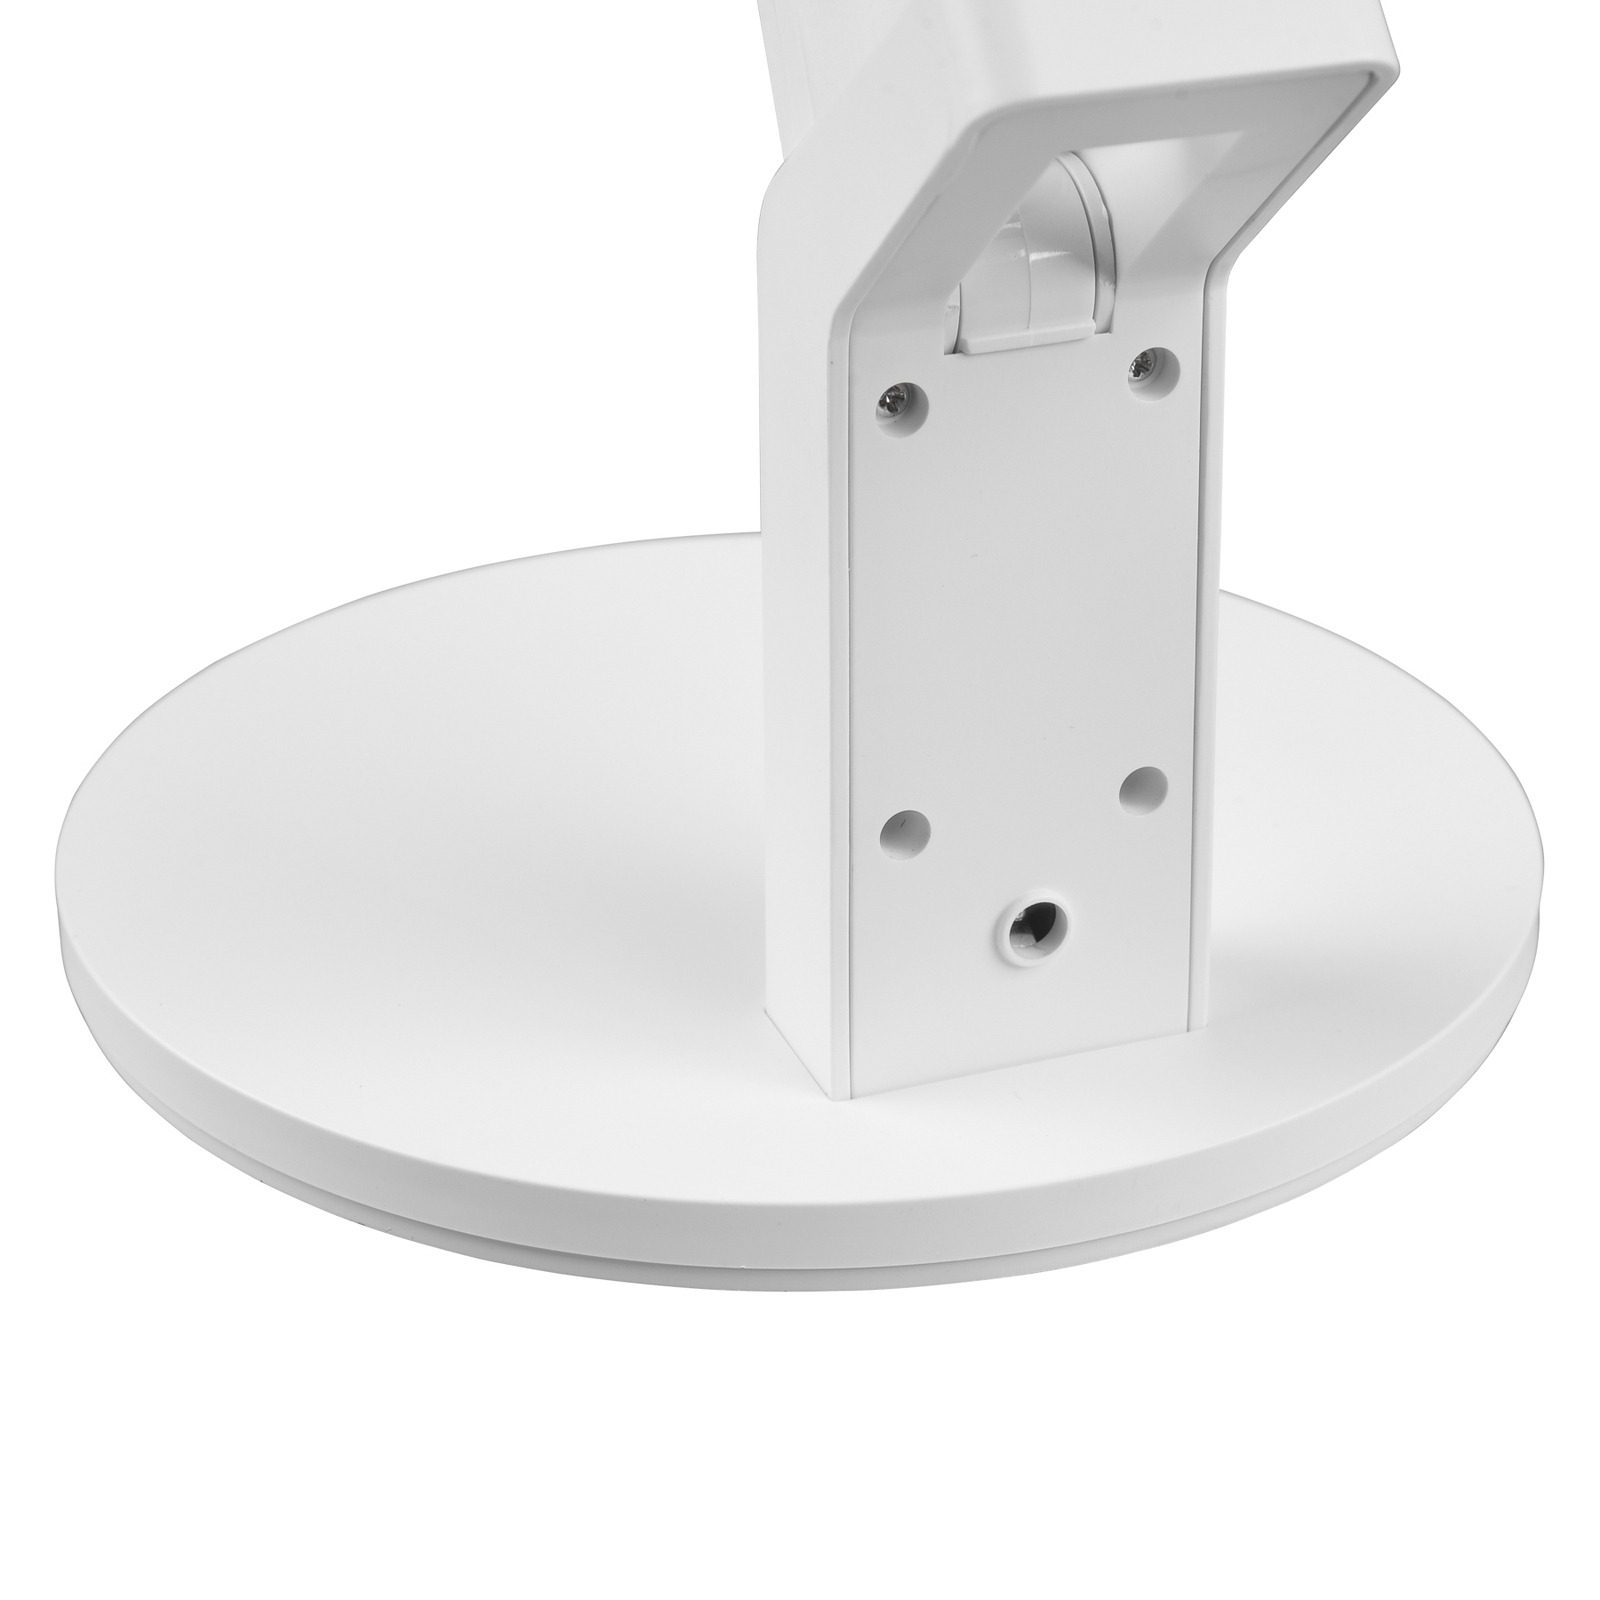 LED-bordslampa Ava med dimfunktion, vit